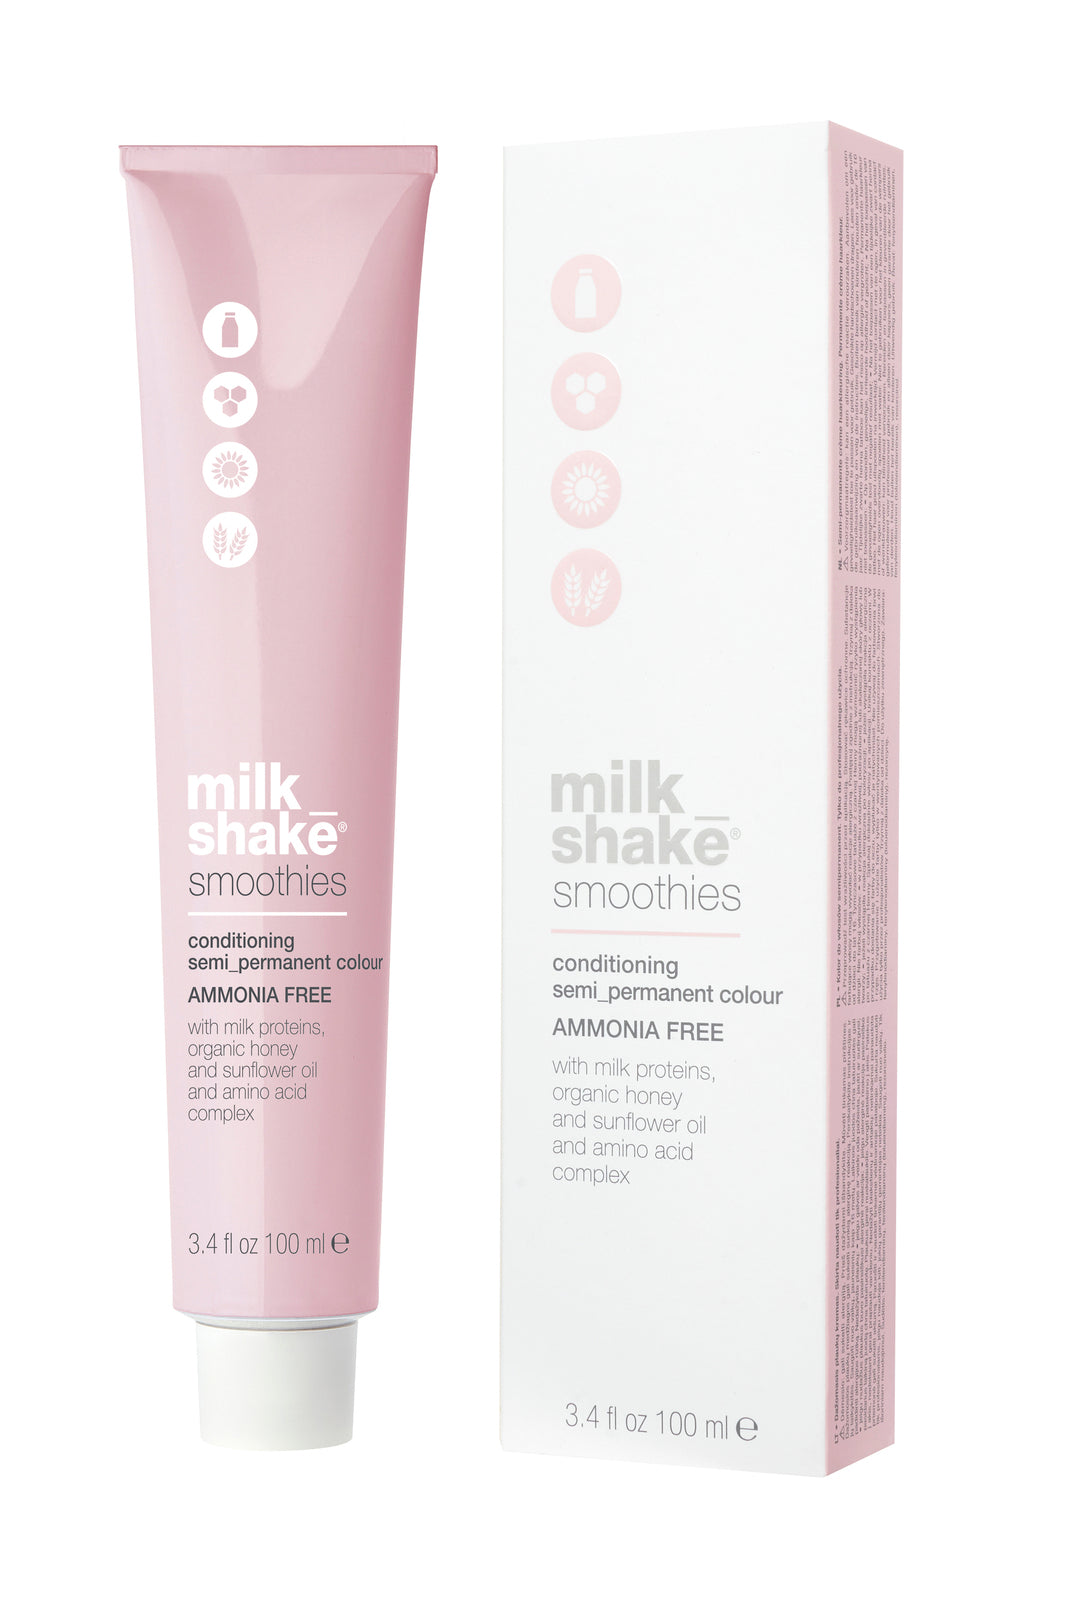 Milkshake smoothies semi-permanent color 6.41